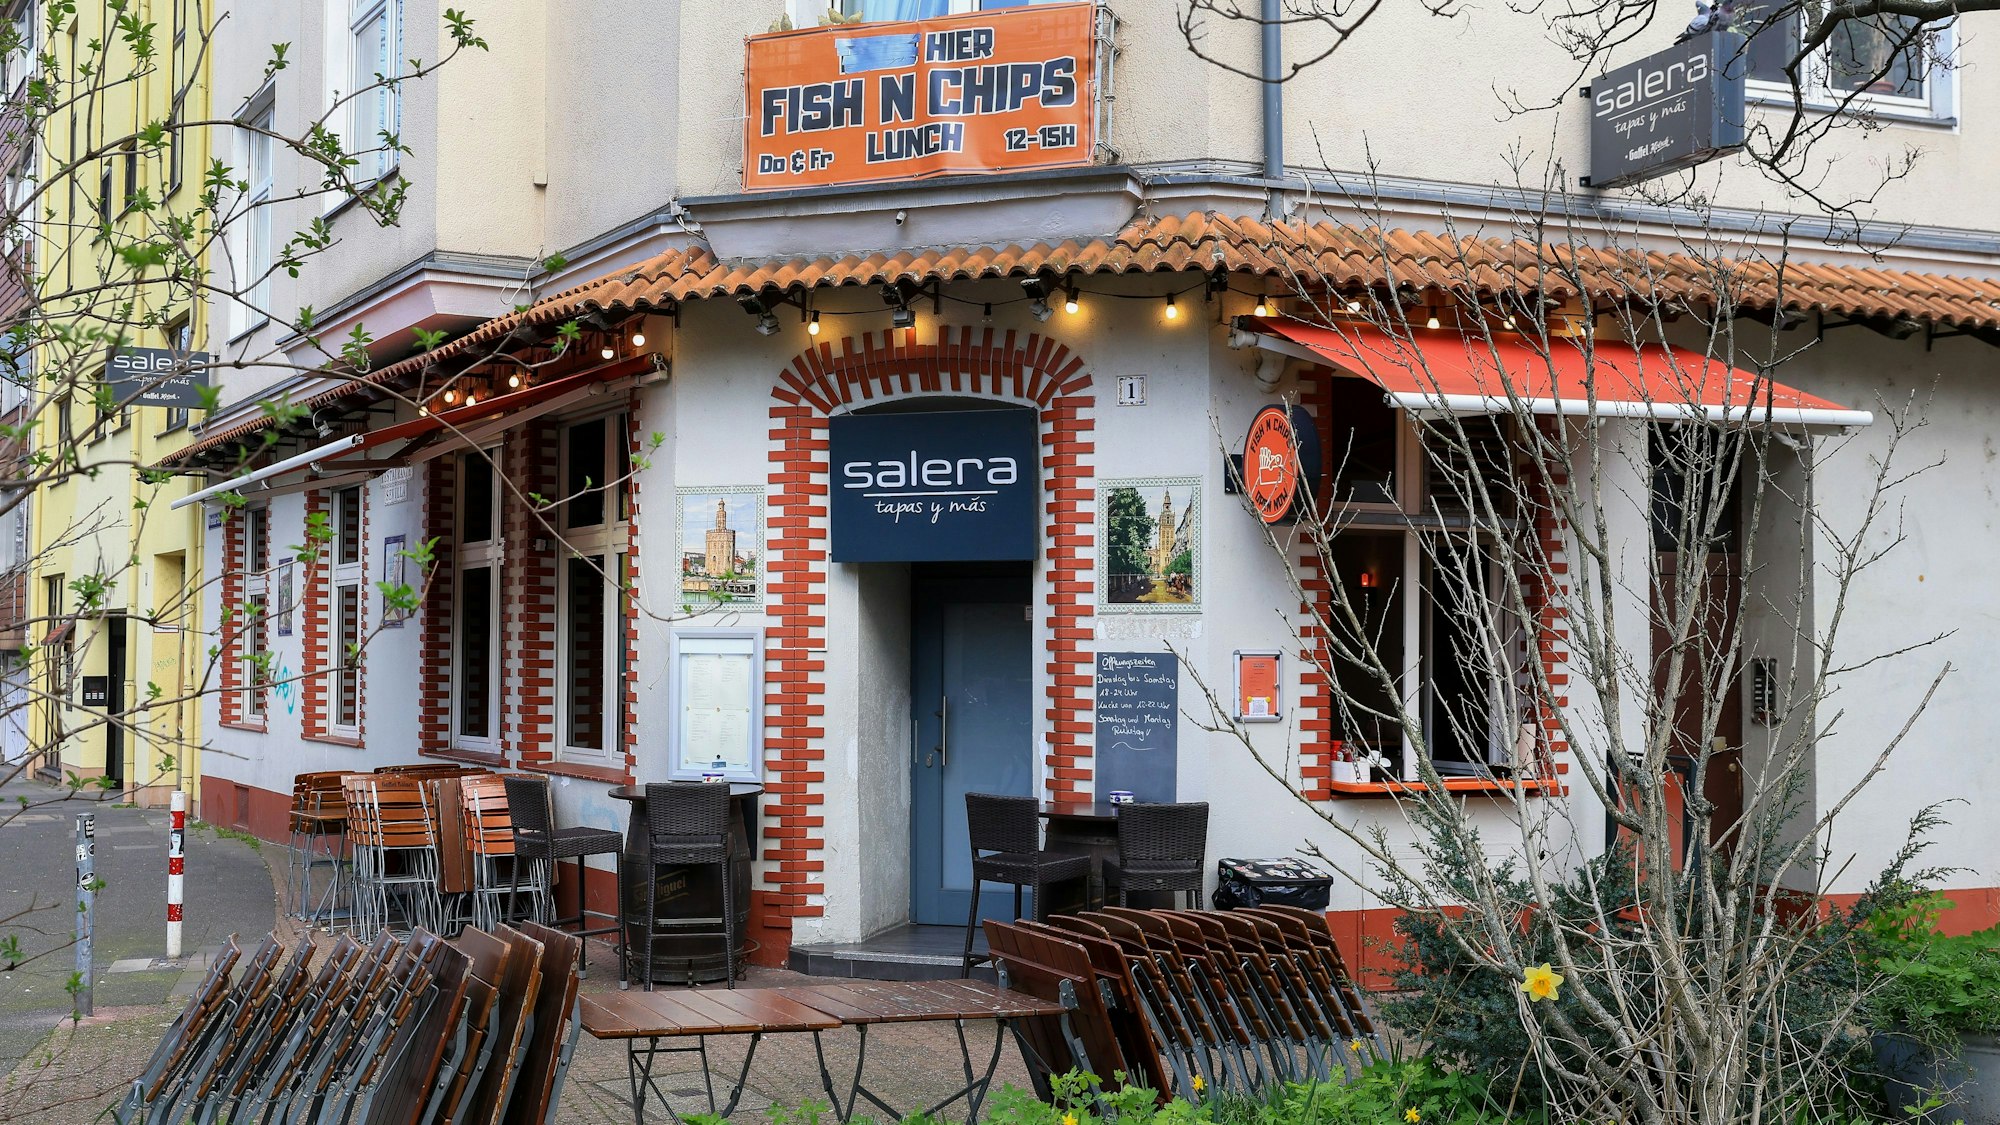 Das Restaurant Salera Tapas bieten jetzt auch Fish and Chips am Take Away Fenster an.
